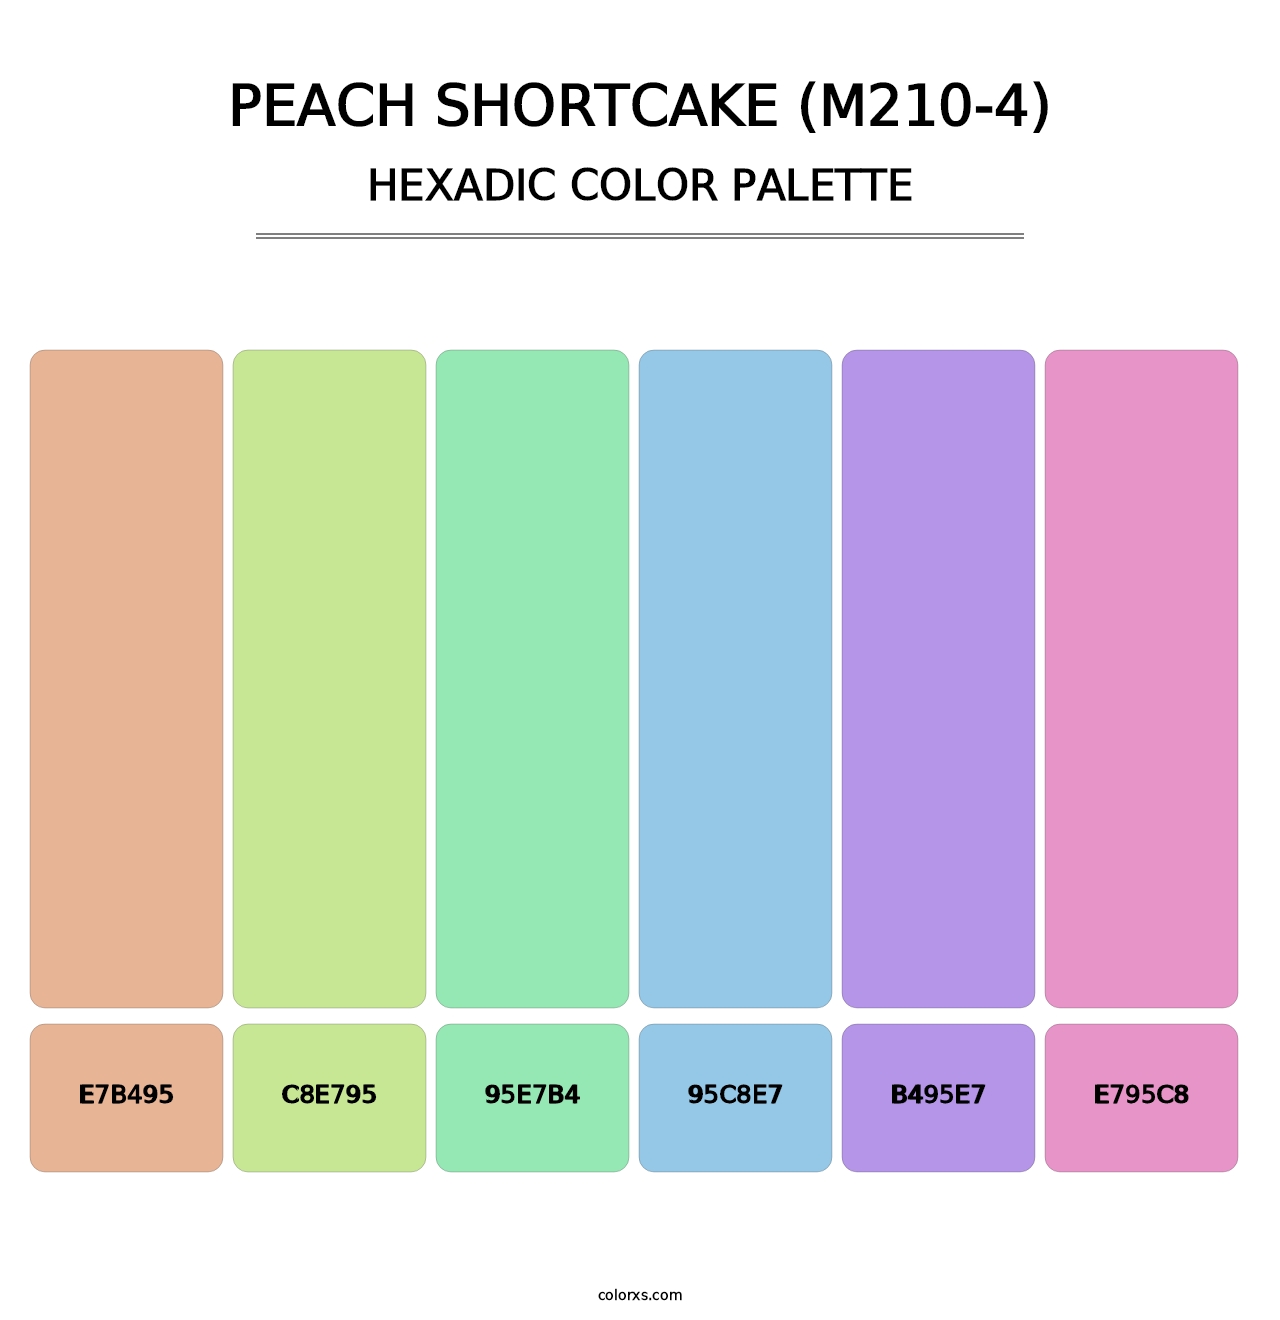 Peach Shortcake (M210-4) - Hexadic Color Palette